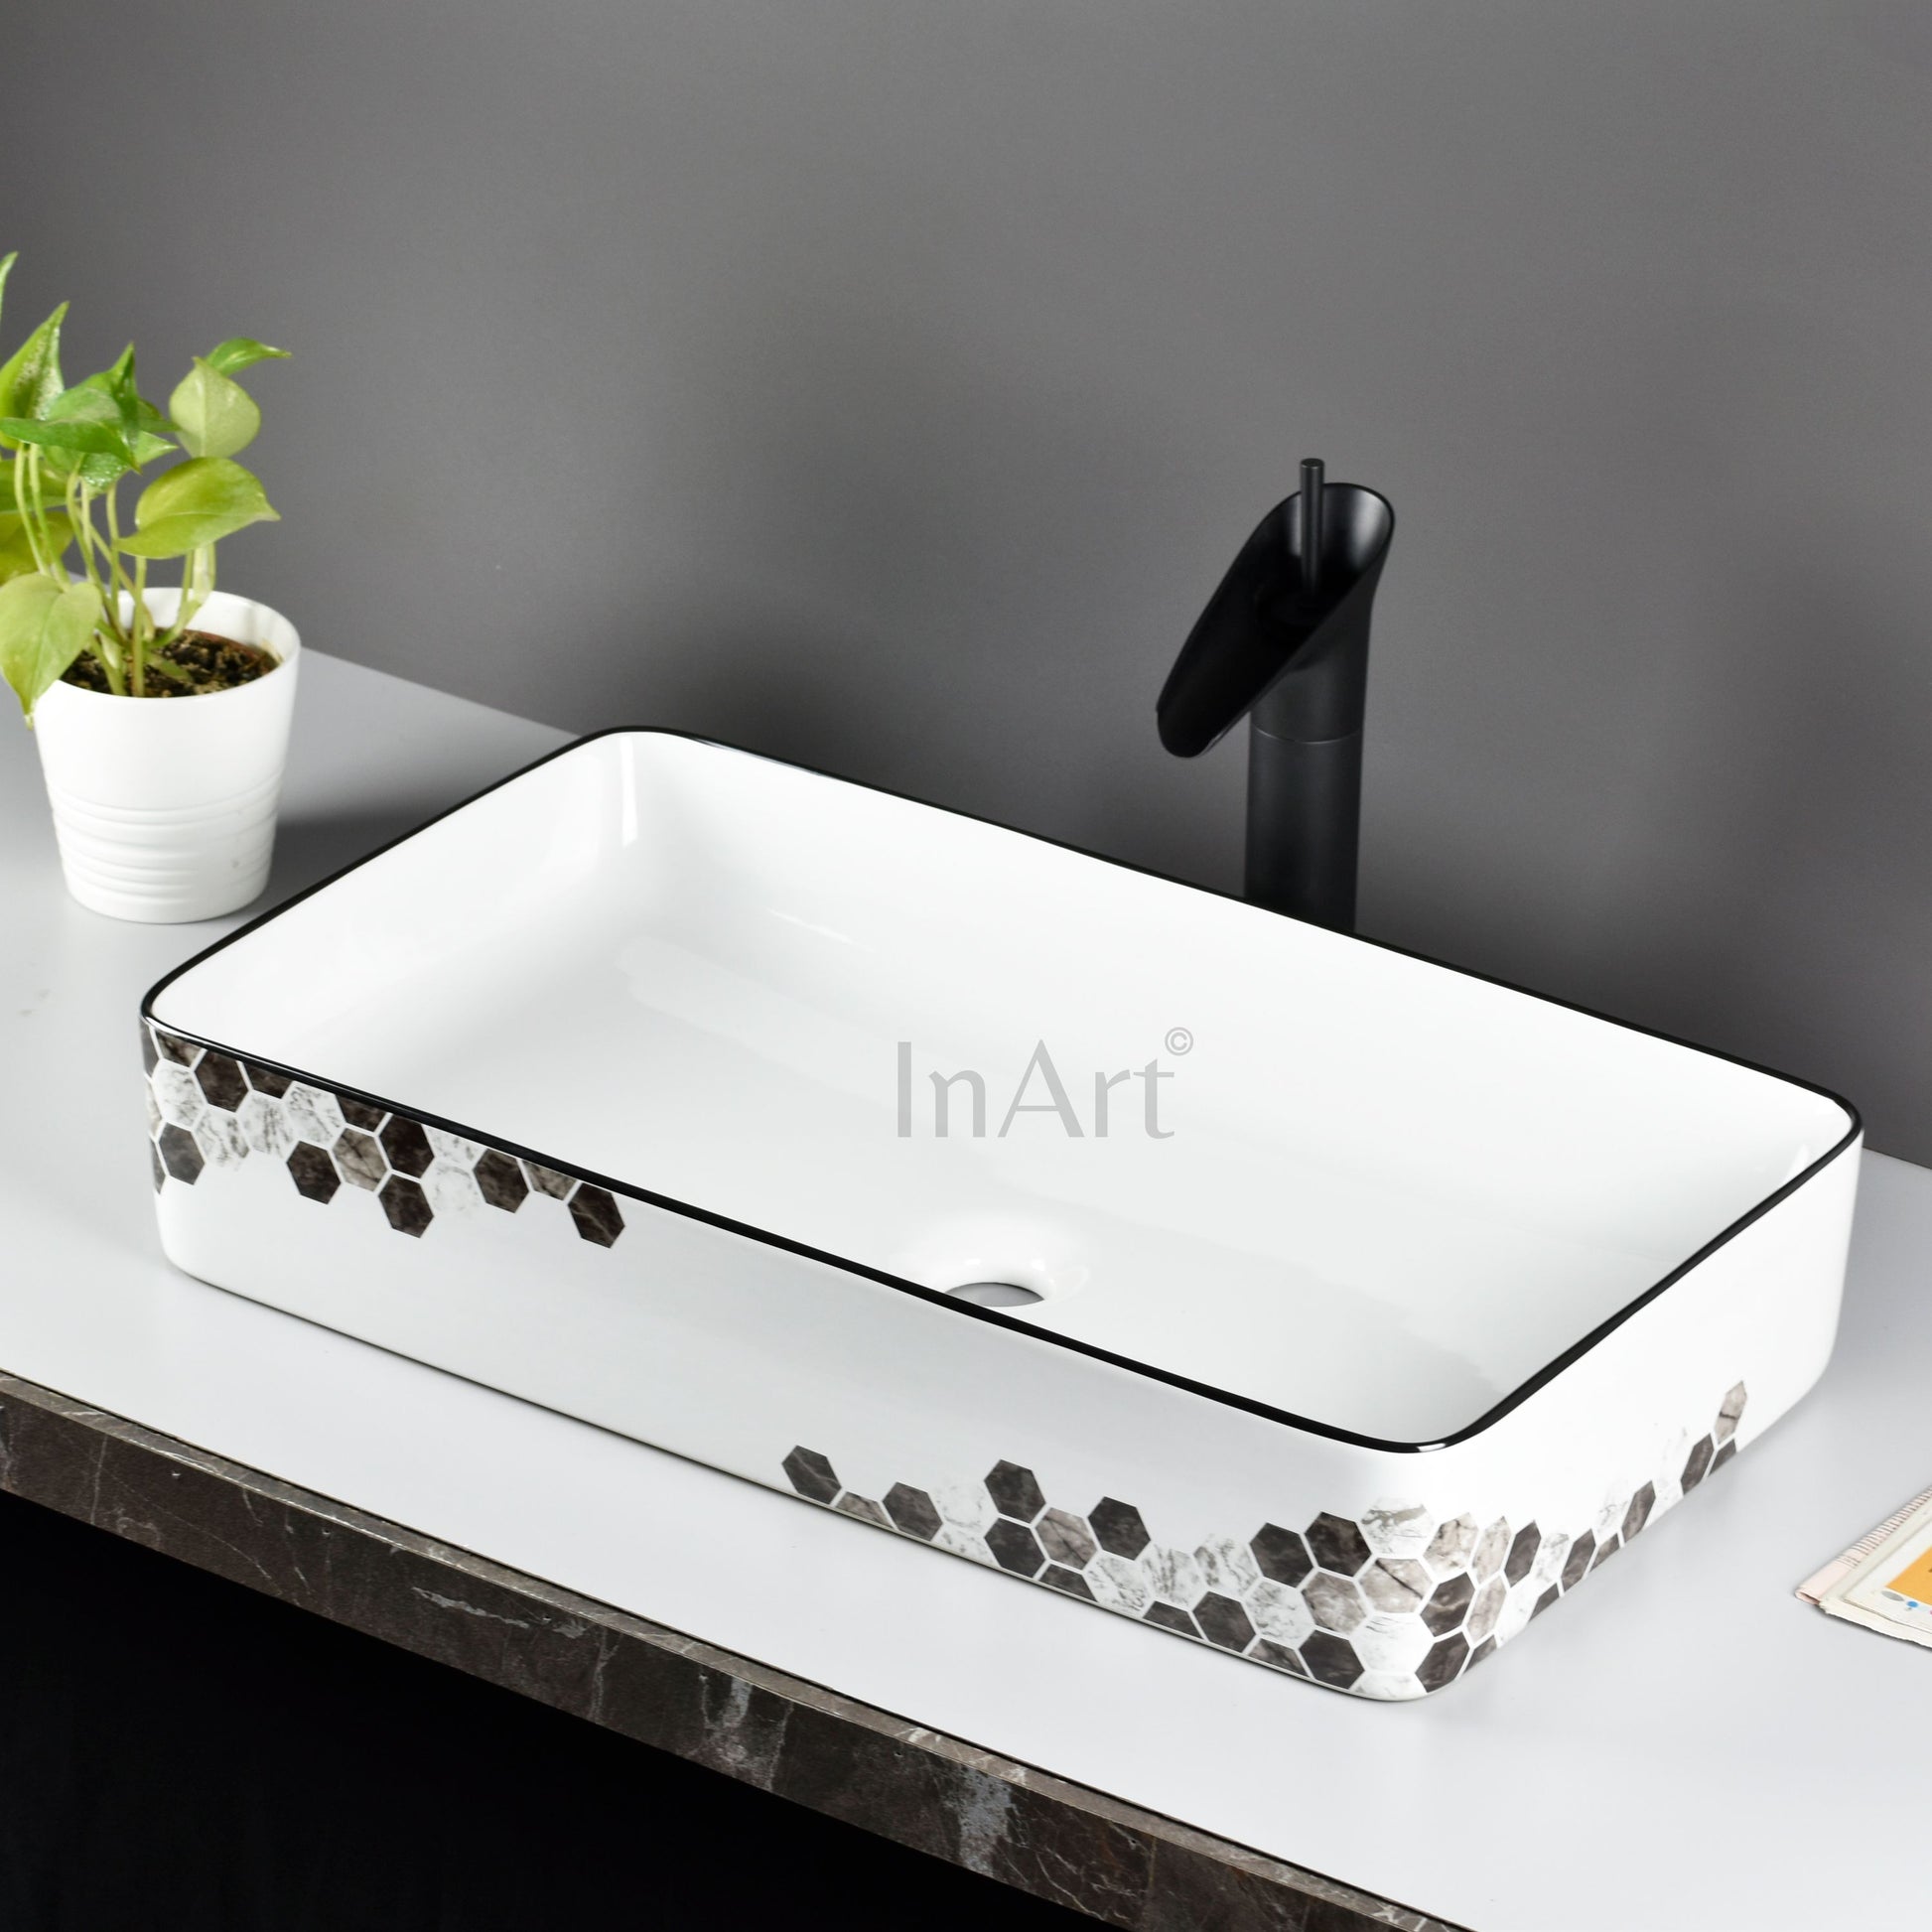 InArt Wash Basin Designer Counter Top Bathroom Sink - Vanity Wash Basin for Bathroom, Table Top Wash Basin 62 x 35 x 12 cm Black White DW270 - InArt-Studio